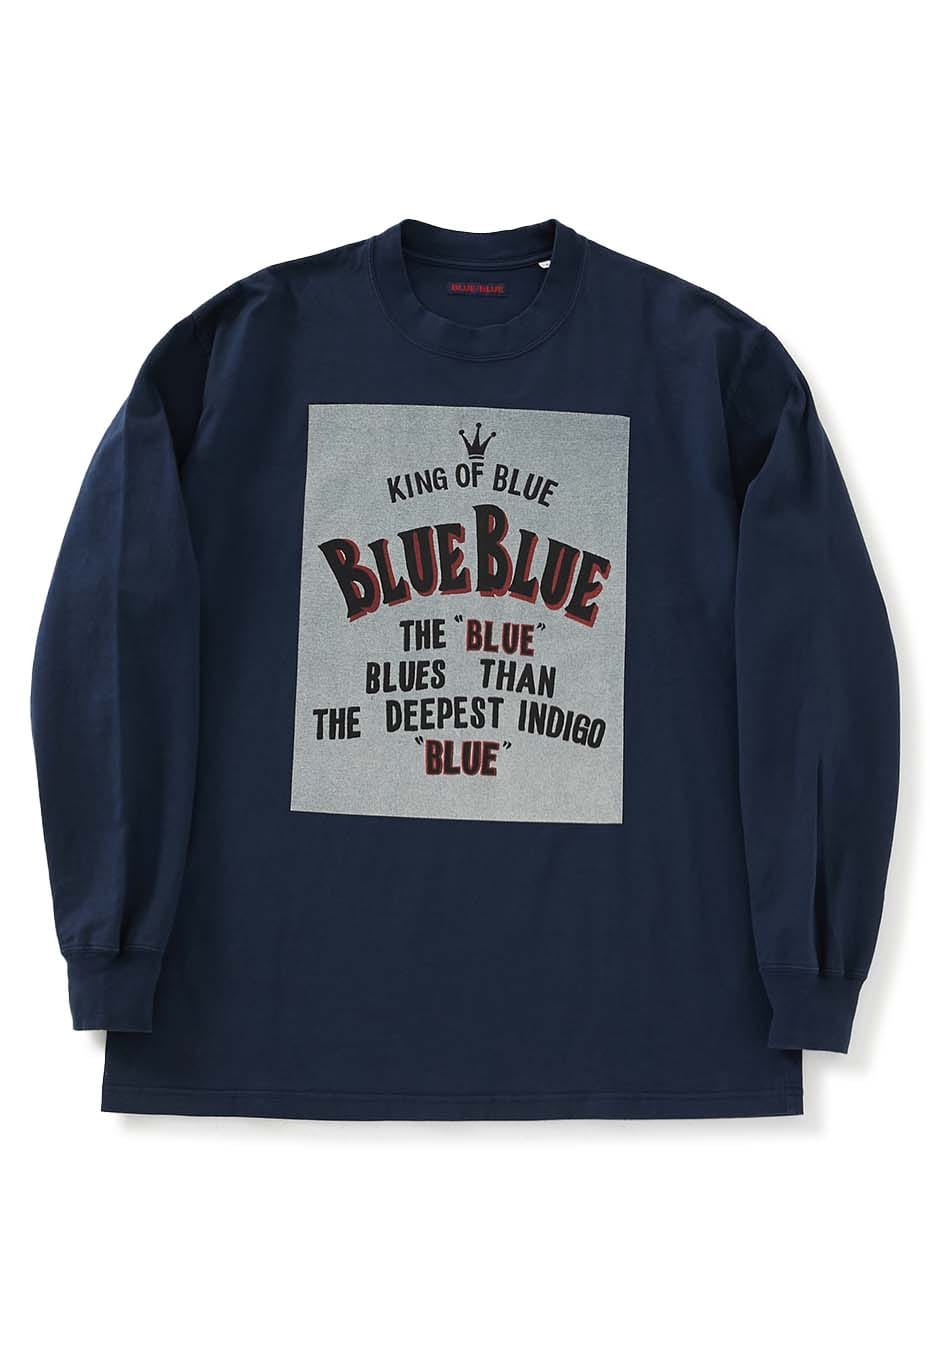 BLUE BLUE|Tシャツ|KING OF BLUE クルーネックロングスリーブTシャツ